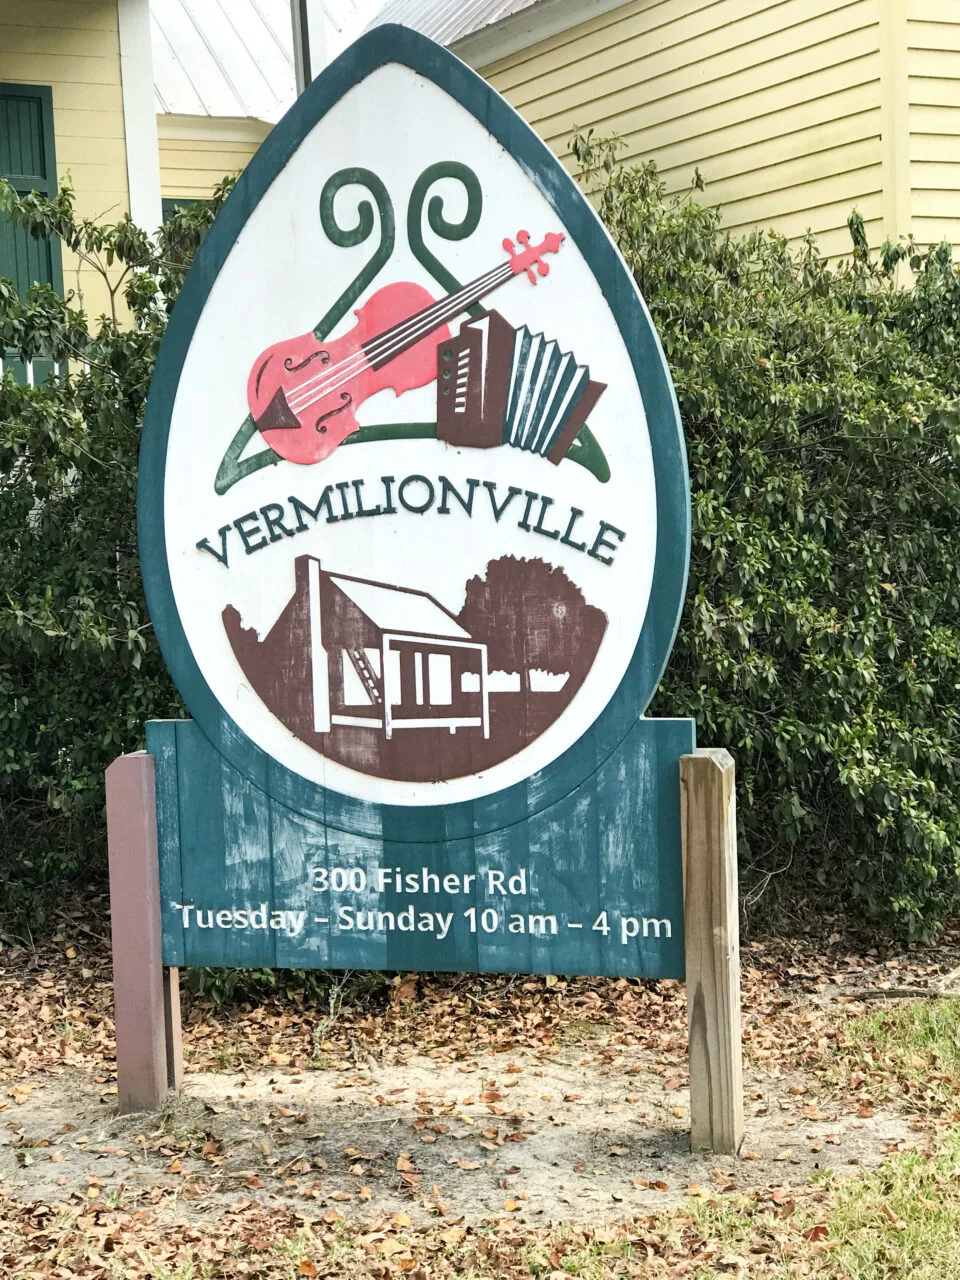 The Vermillionville sign.